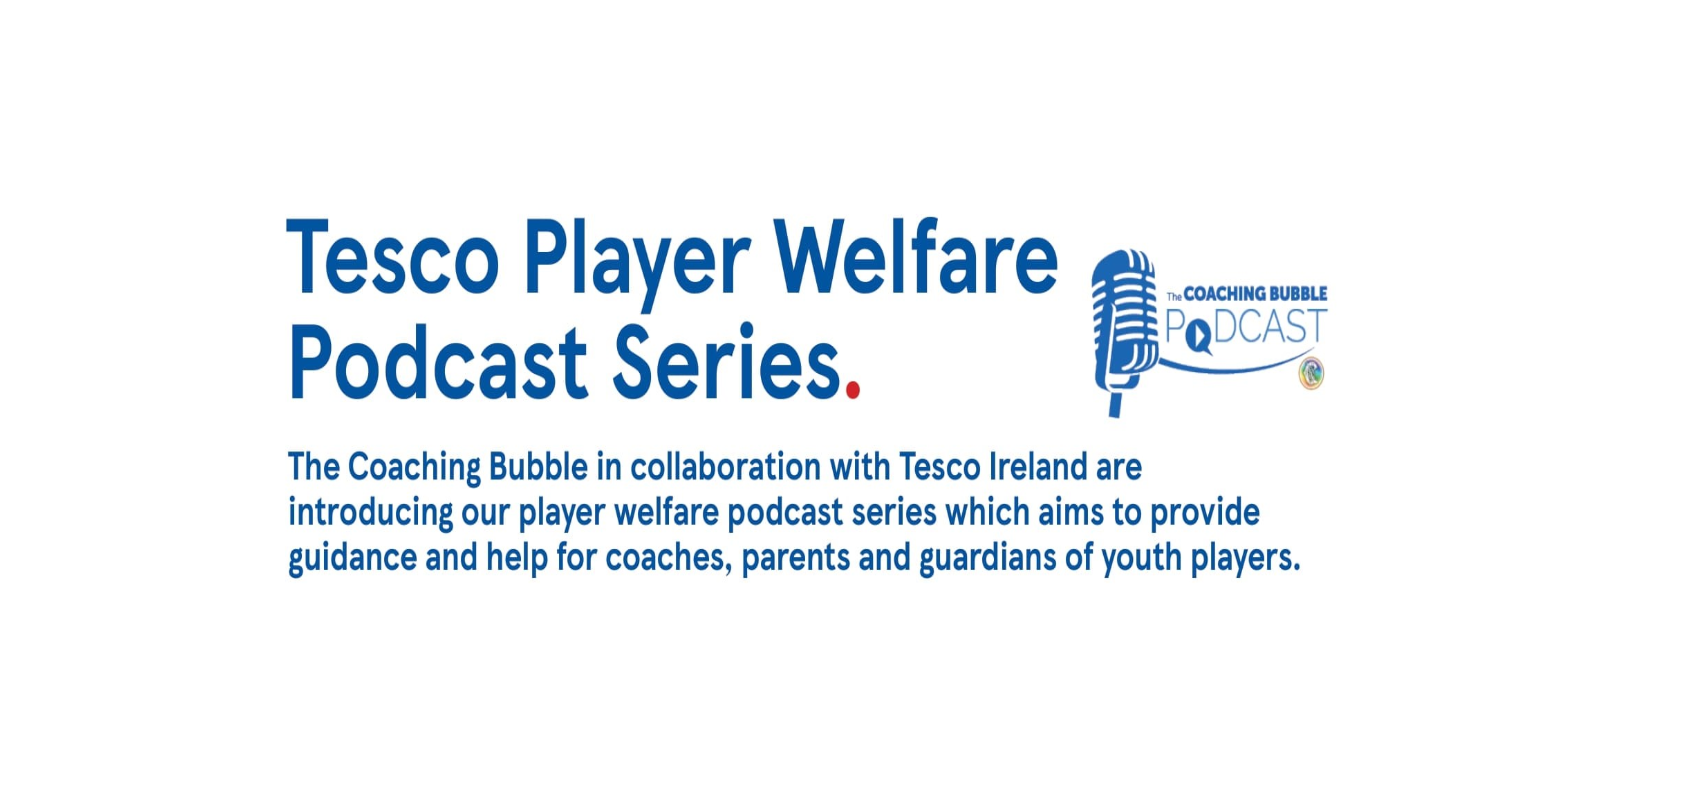 The Tesco Player Welfare Podcast Series